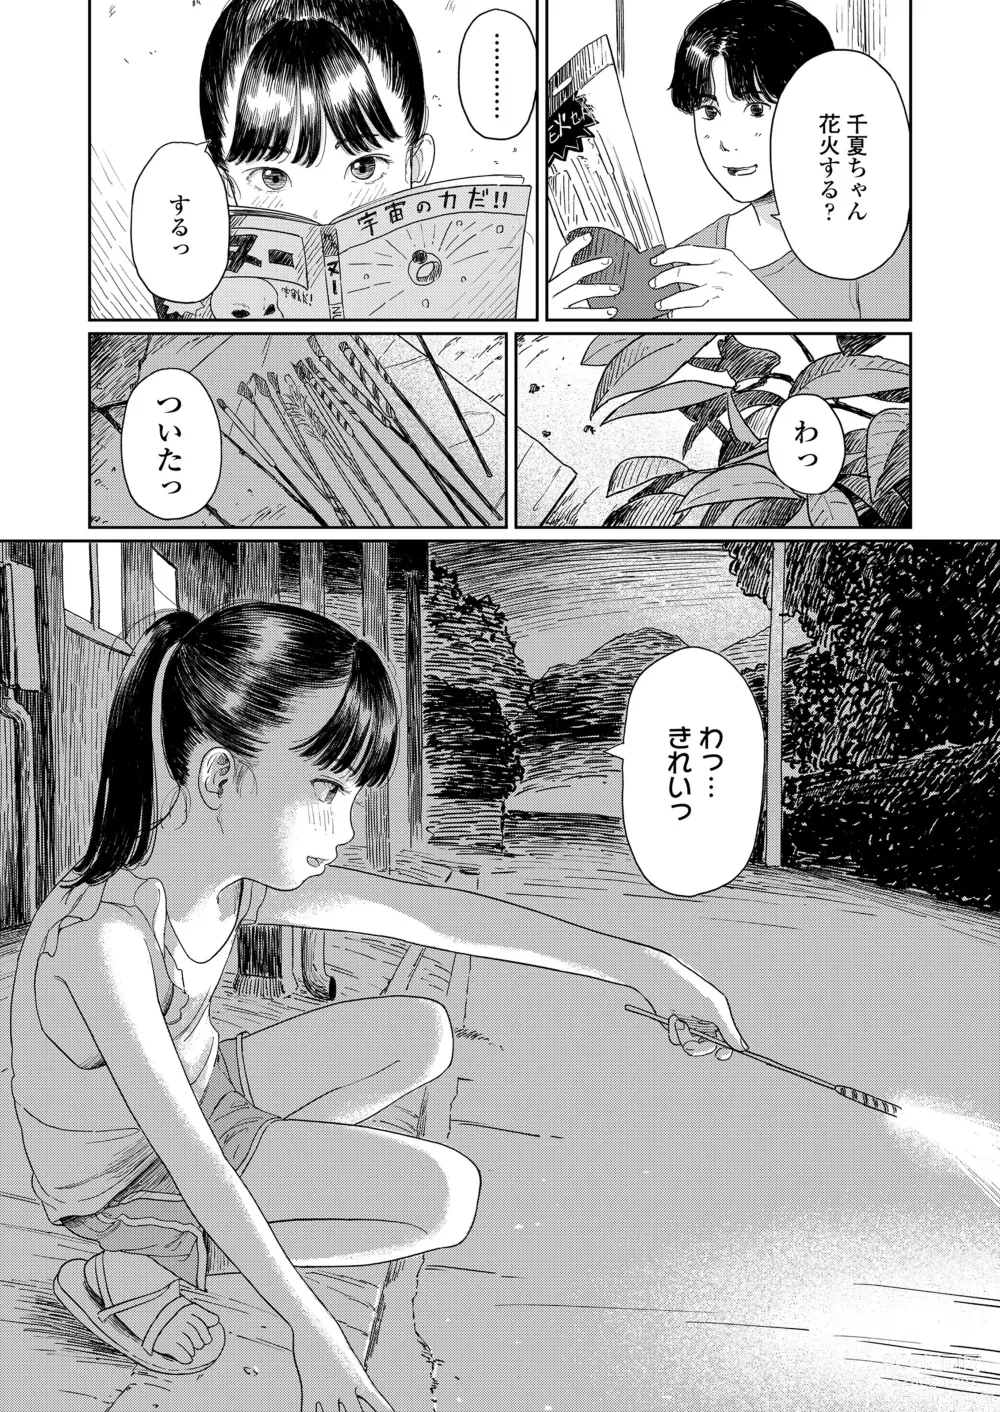 Page 11 of manga COMIC LOE VOL.4 NEXT